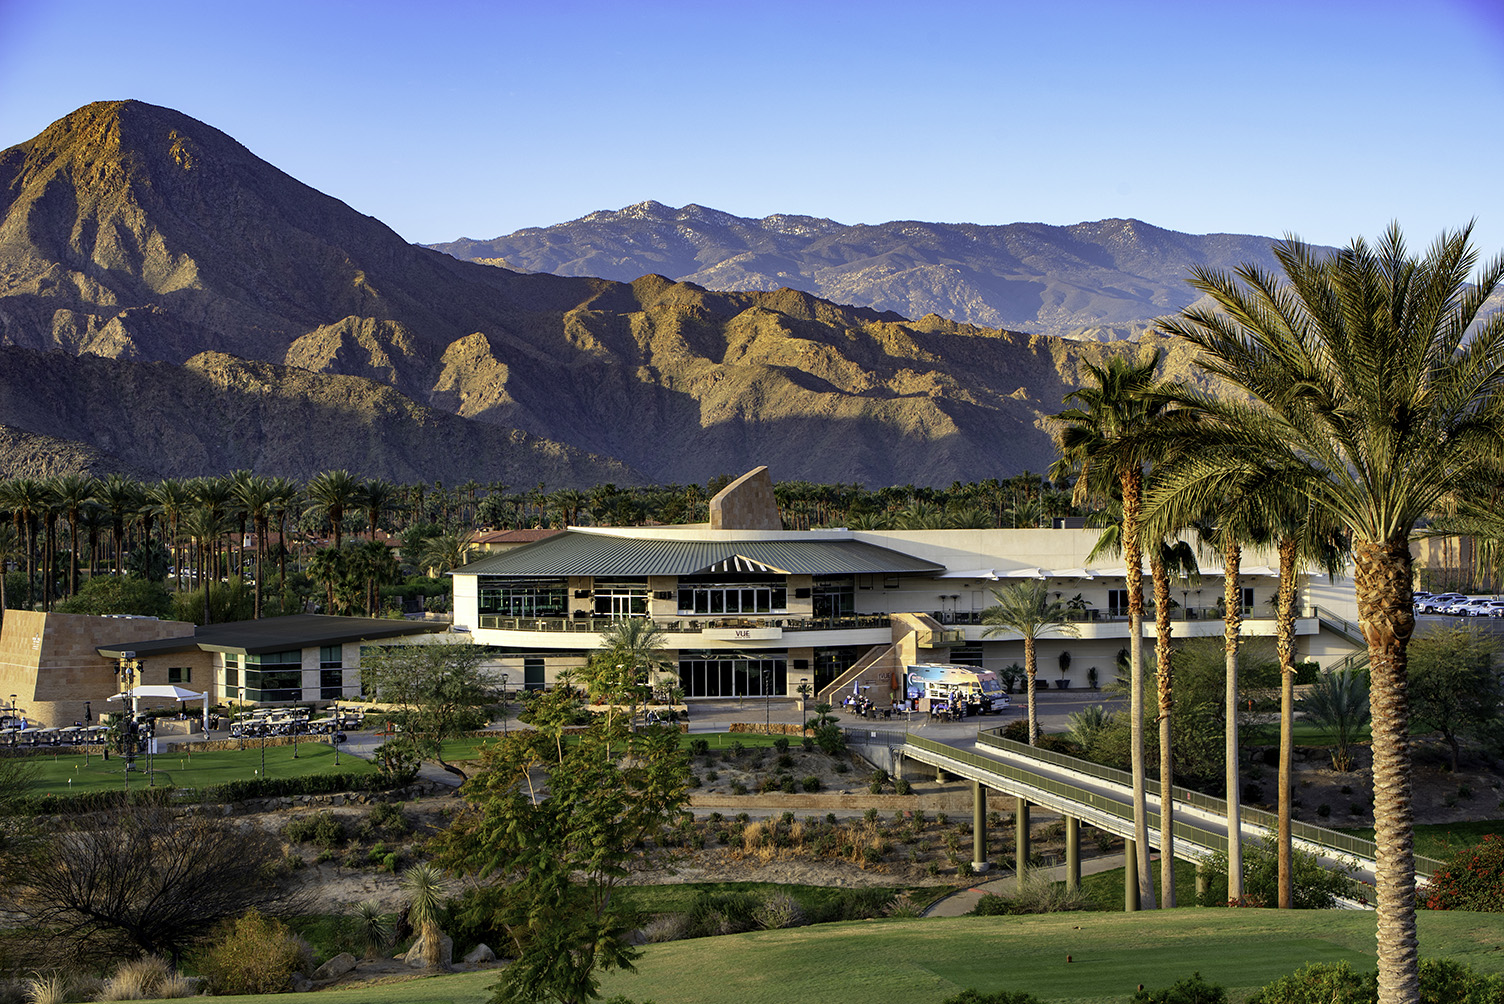 Indian Wells Golf Resort Clubhouse in Coachella Valley